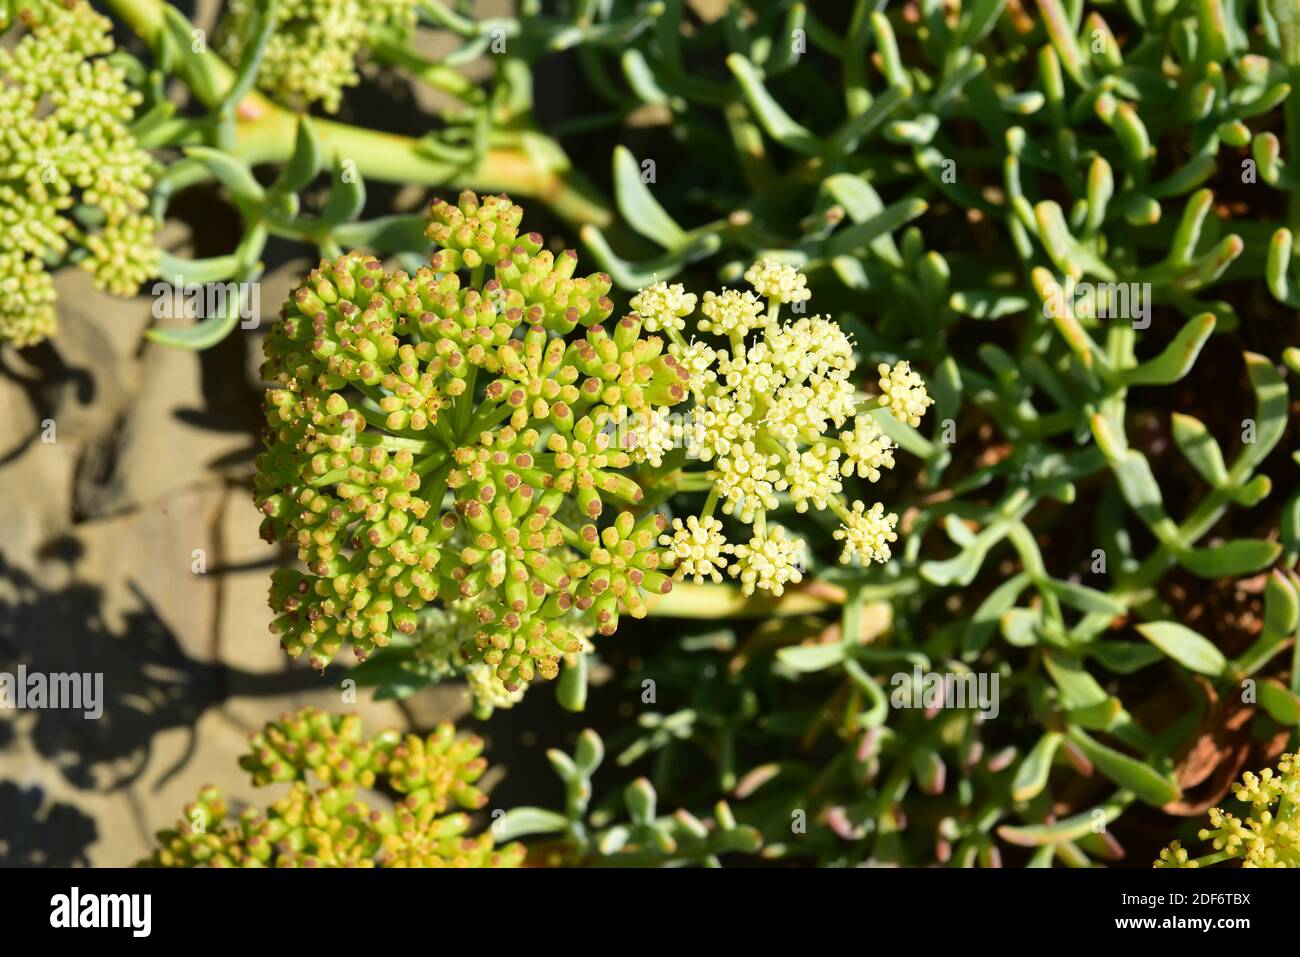 Sea fennel or samphire (Crithmum maritimum) is an edible perennial herb native to Mediterranean Basin coasts. Flowers and fruits detail. This photo Stock Photo